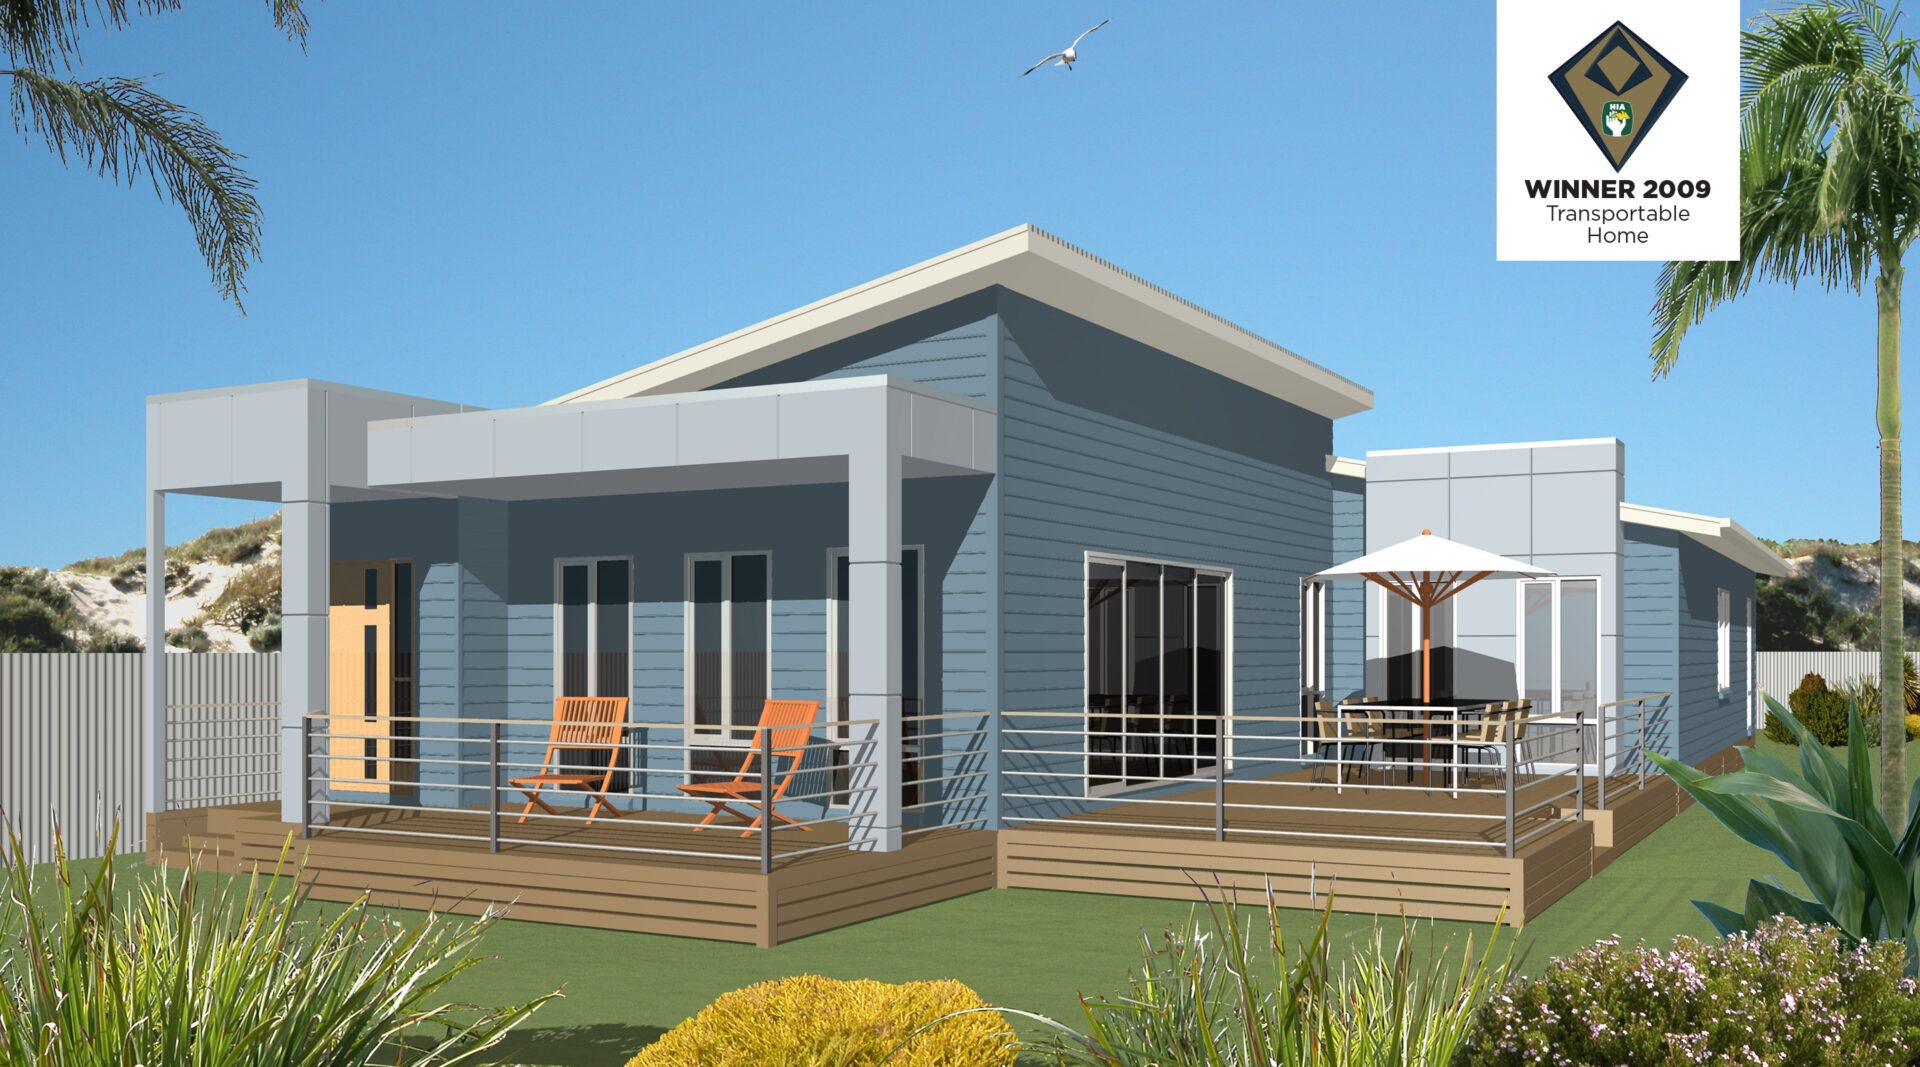 Image of the Coastal house design